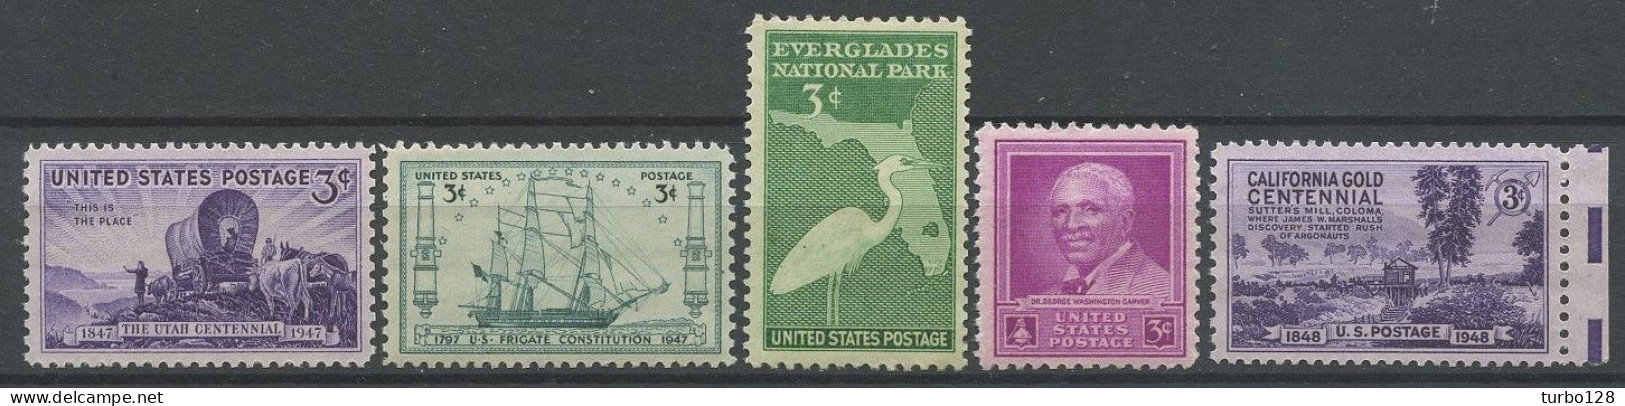 EU 1947 N° 501/505 ** Neufs MNH Superbes C 2.30 € Utah Bateau Voilier Sailboat Constitution Oiseau Bird Héron Carver Or - Ongebruikt